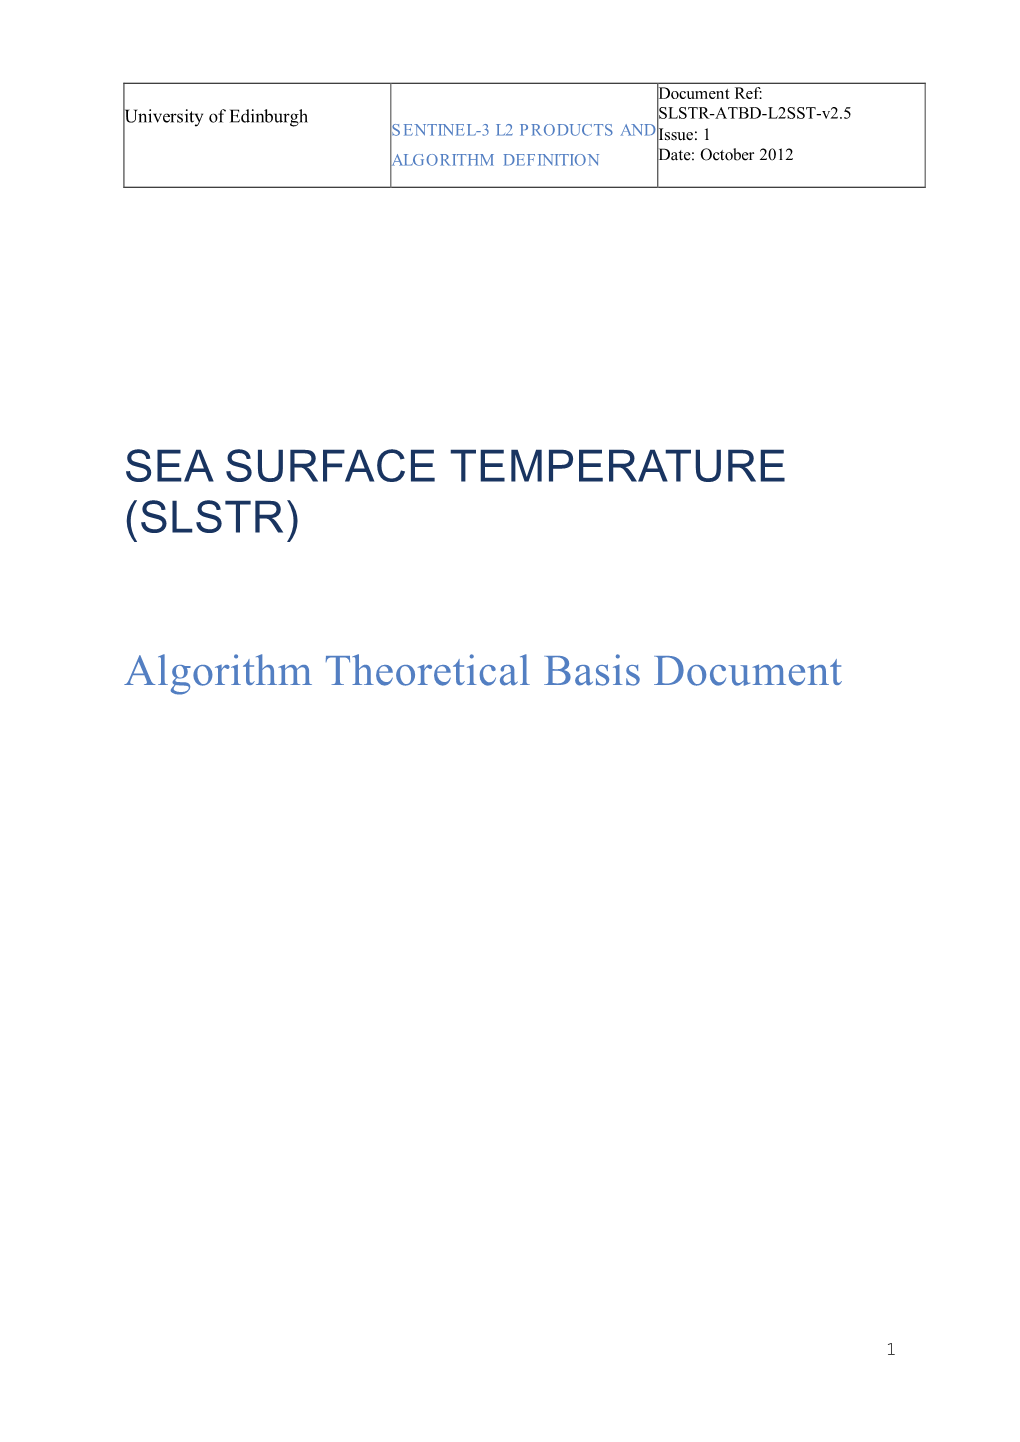 SEA SURFACE TEMPERATURE (SLSTR) Algorithm Theoretical Basis Document